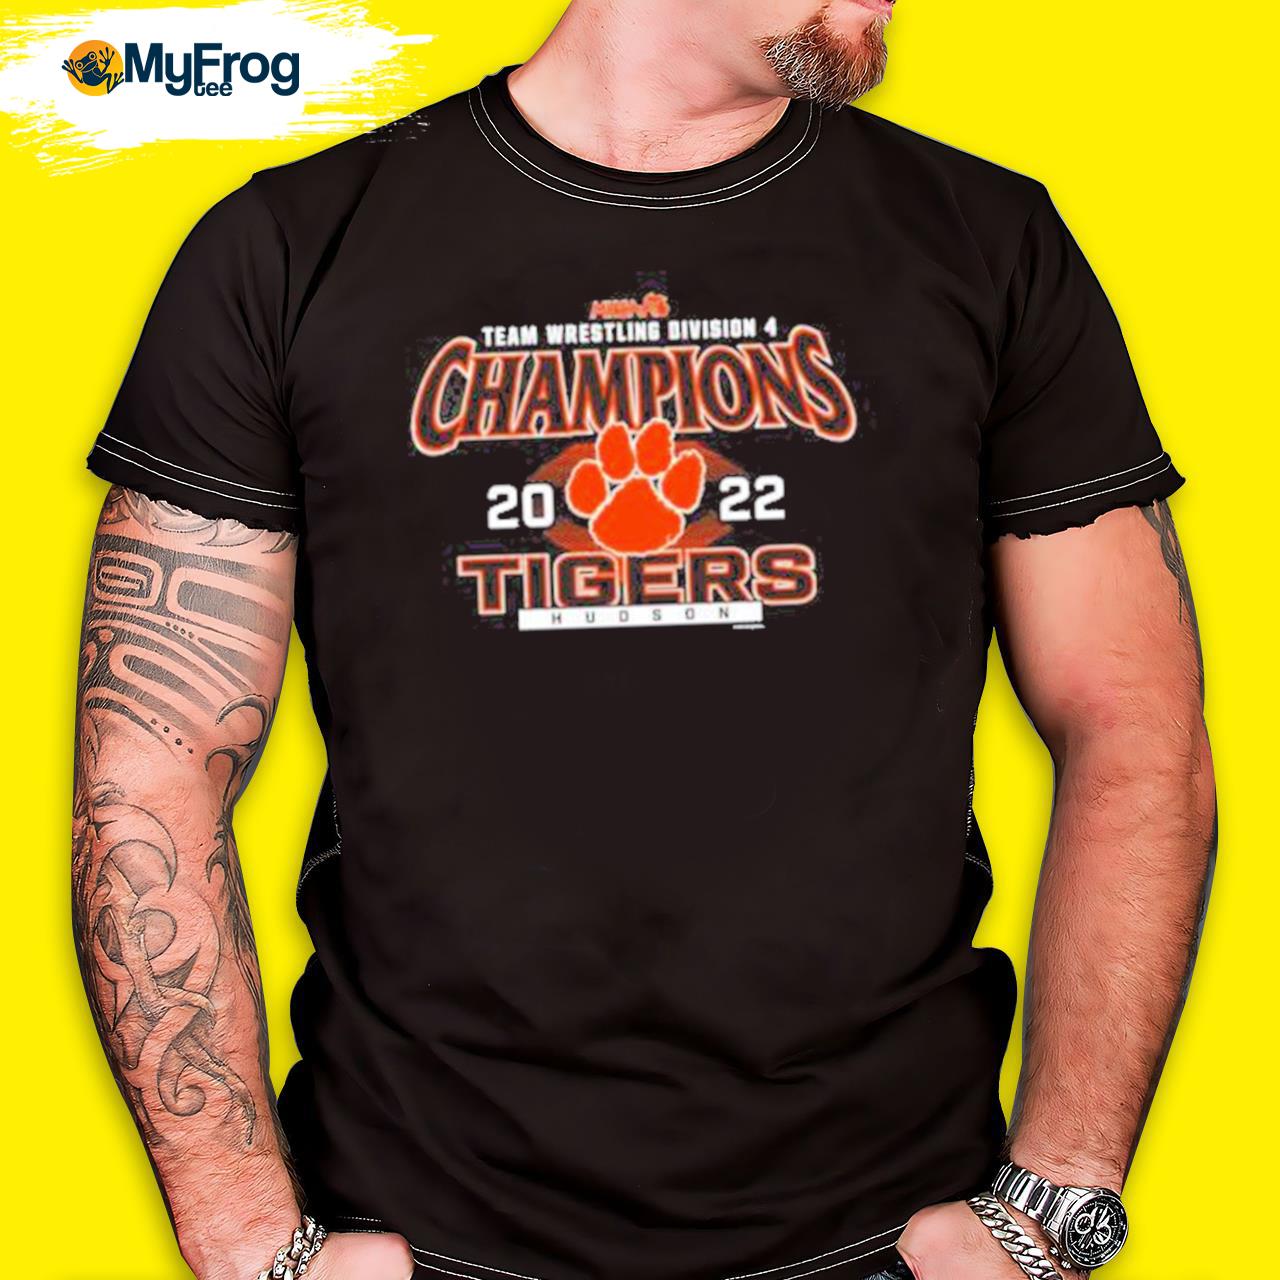 Hudson Tigers Mhsaa Team Wrestling Division 4 Champions 2022 Shirt